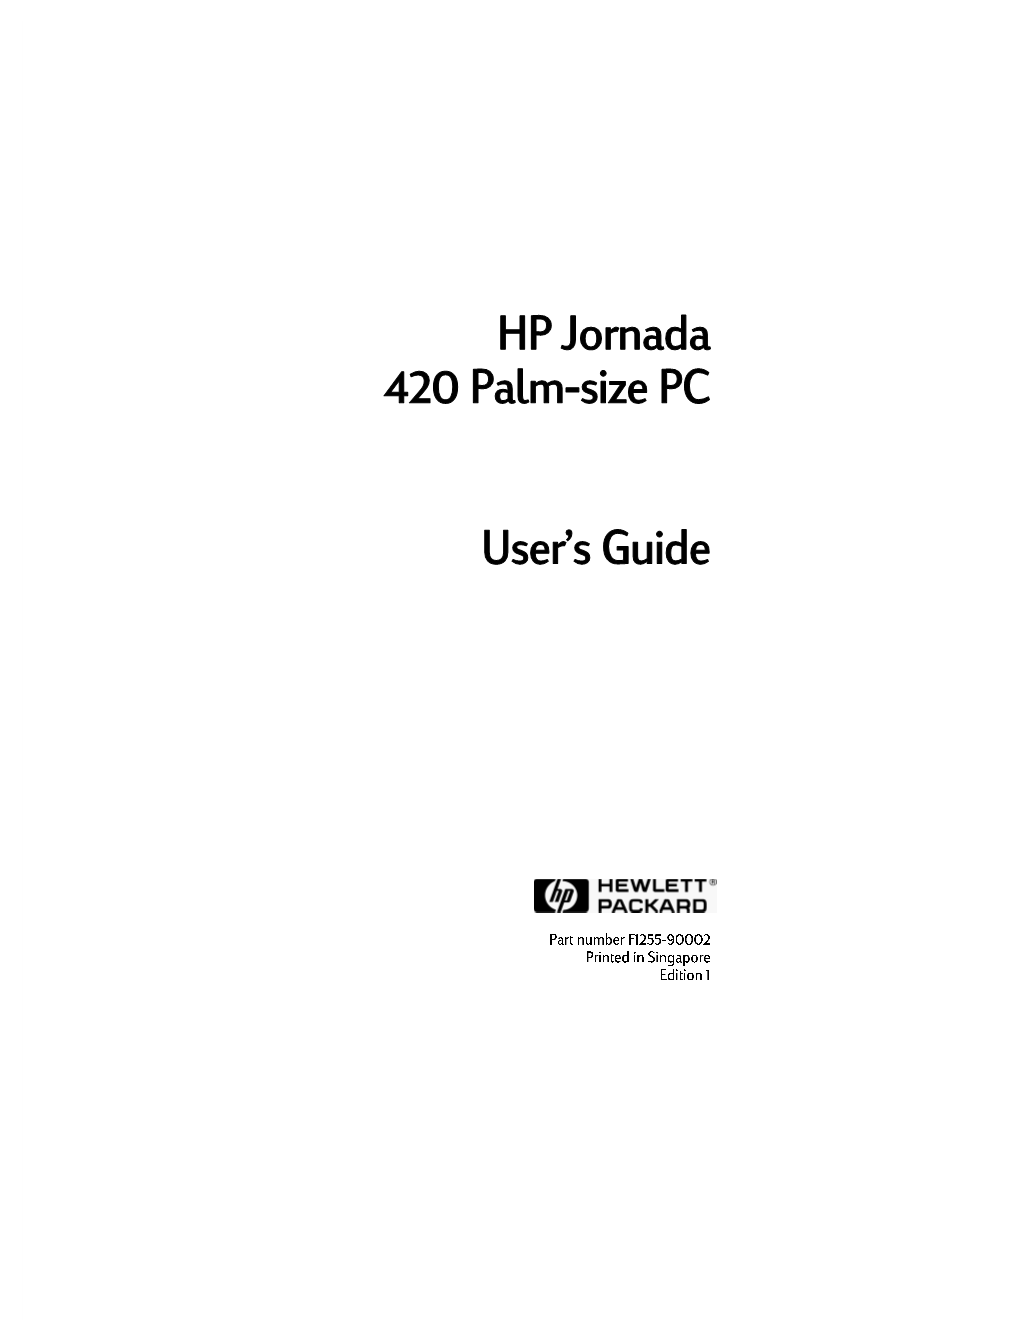 HP Jornada 420 Palm-Size PC User's Guide